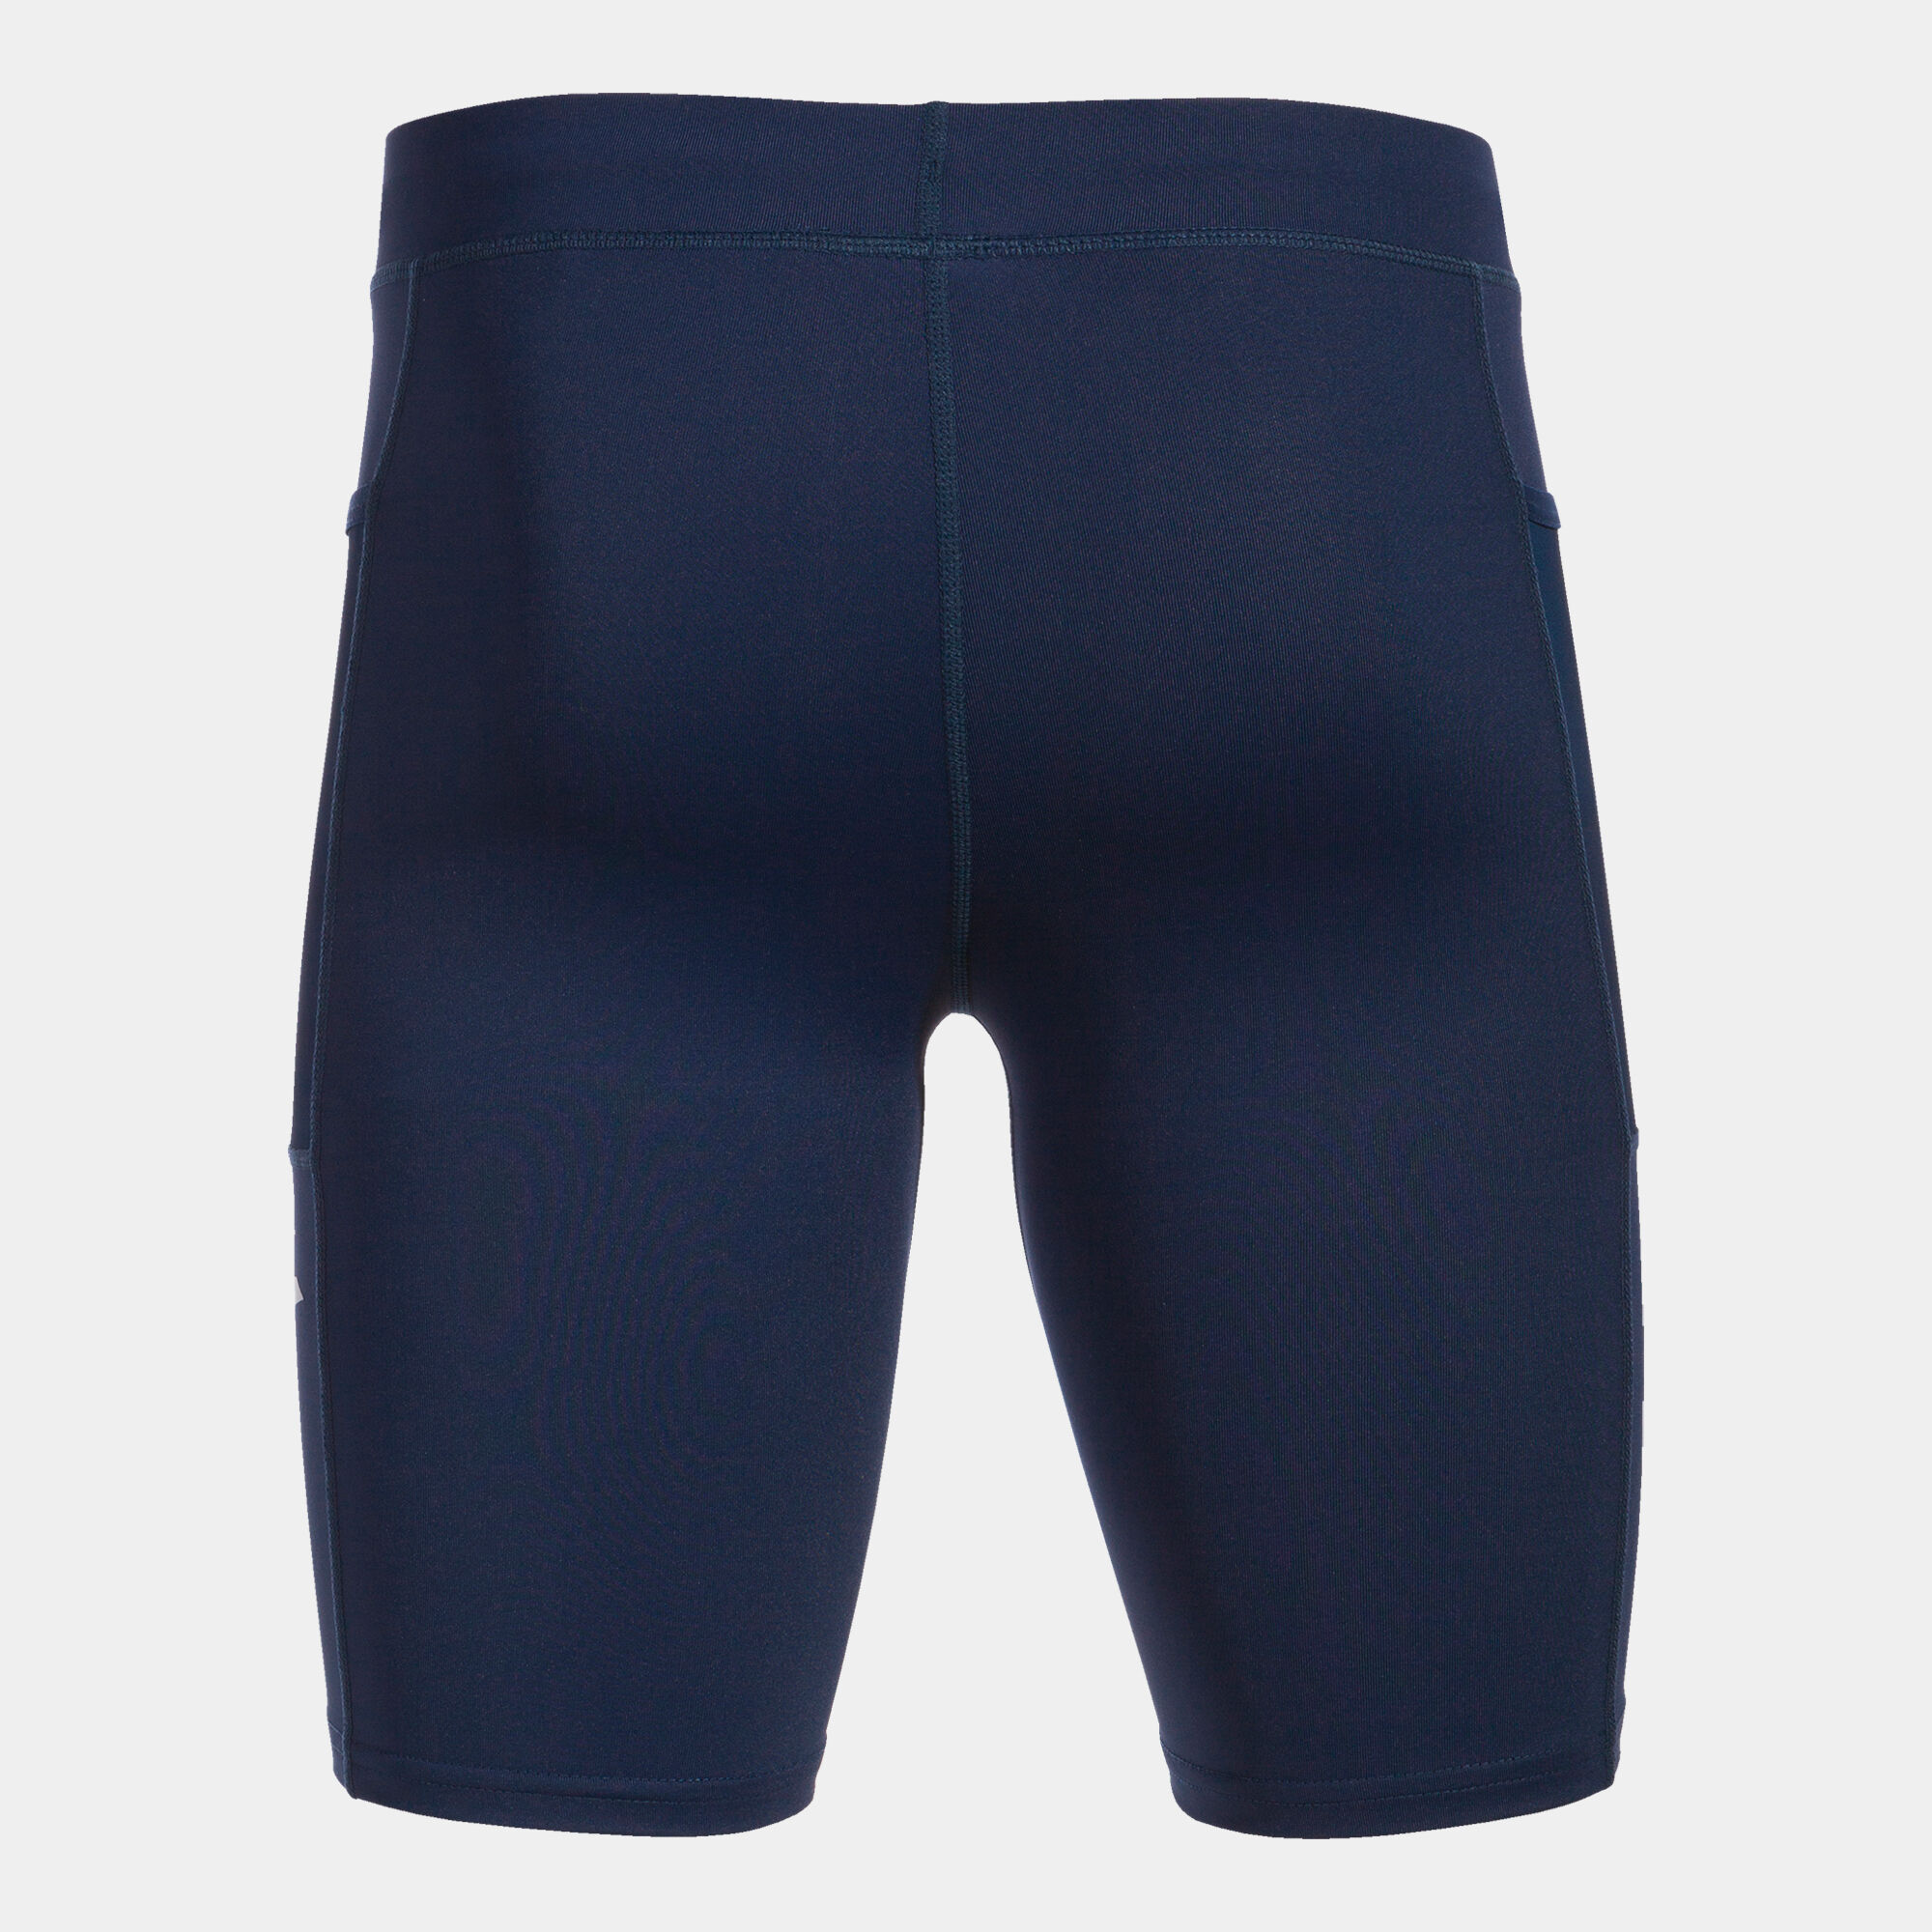 Short tights unisex Elite X navy blue